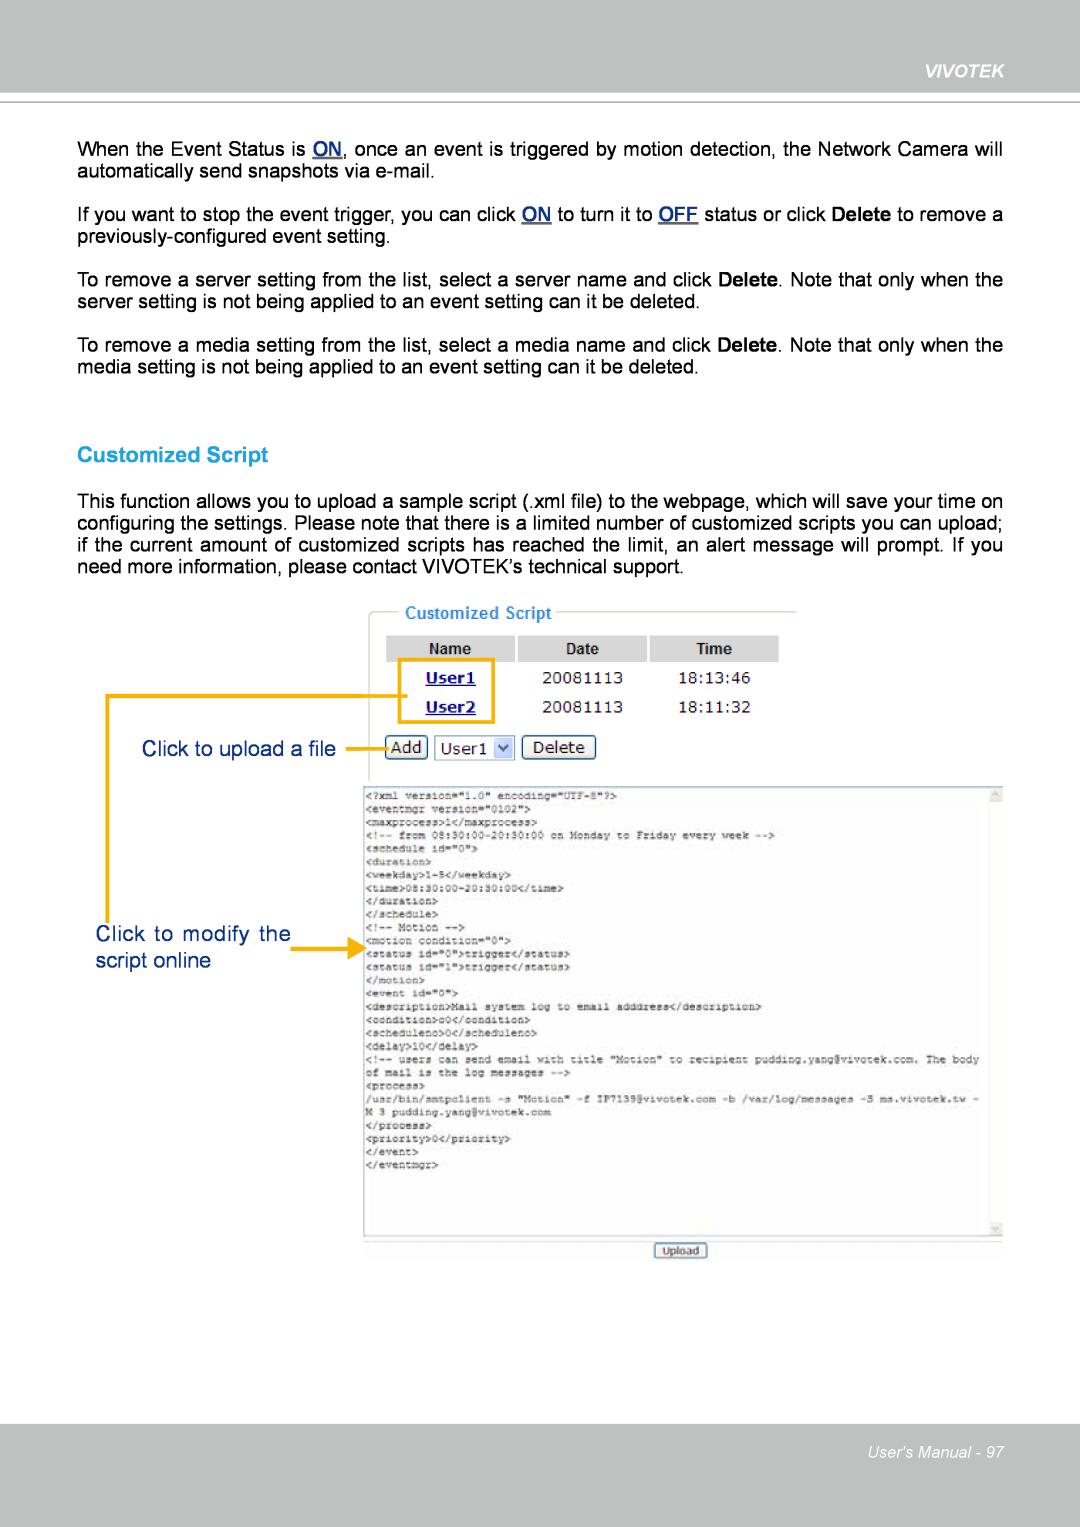 Vivotek IP8352 manual Customized Script, Click to upload a file, Click to modify the script online 